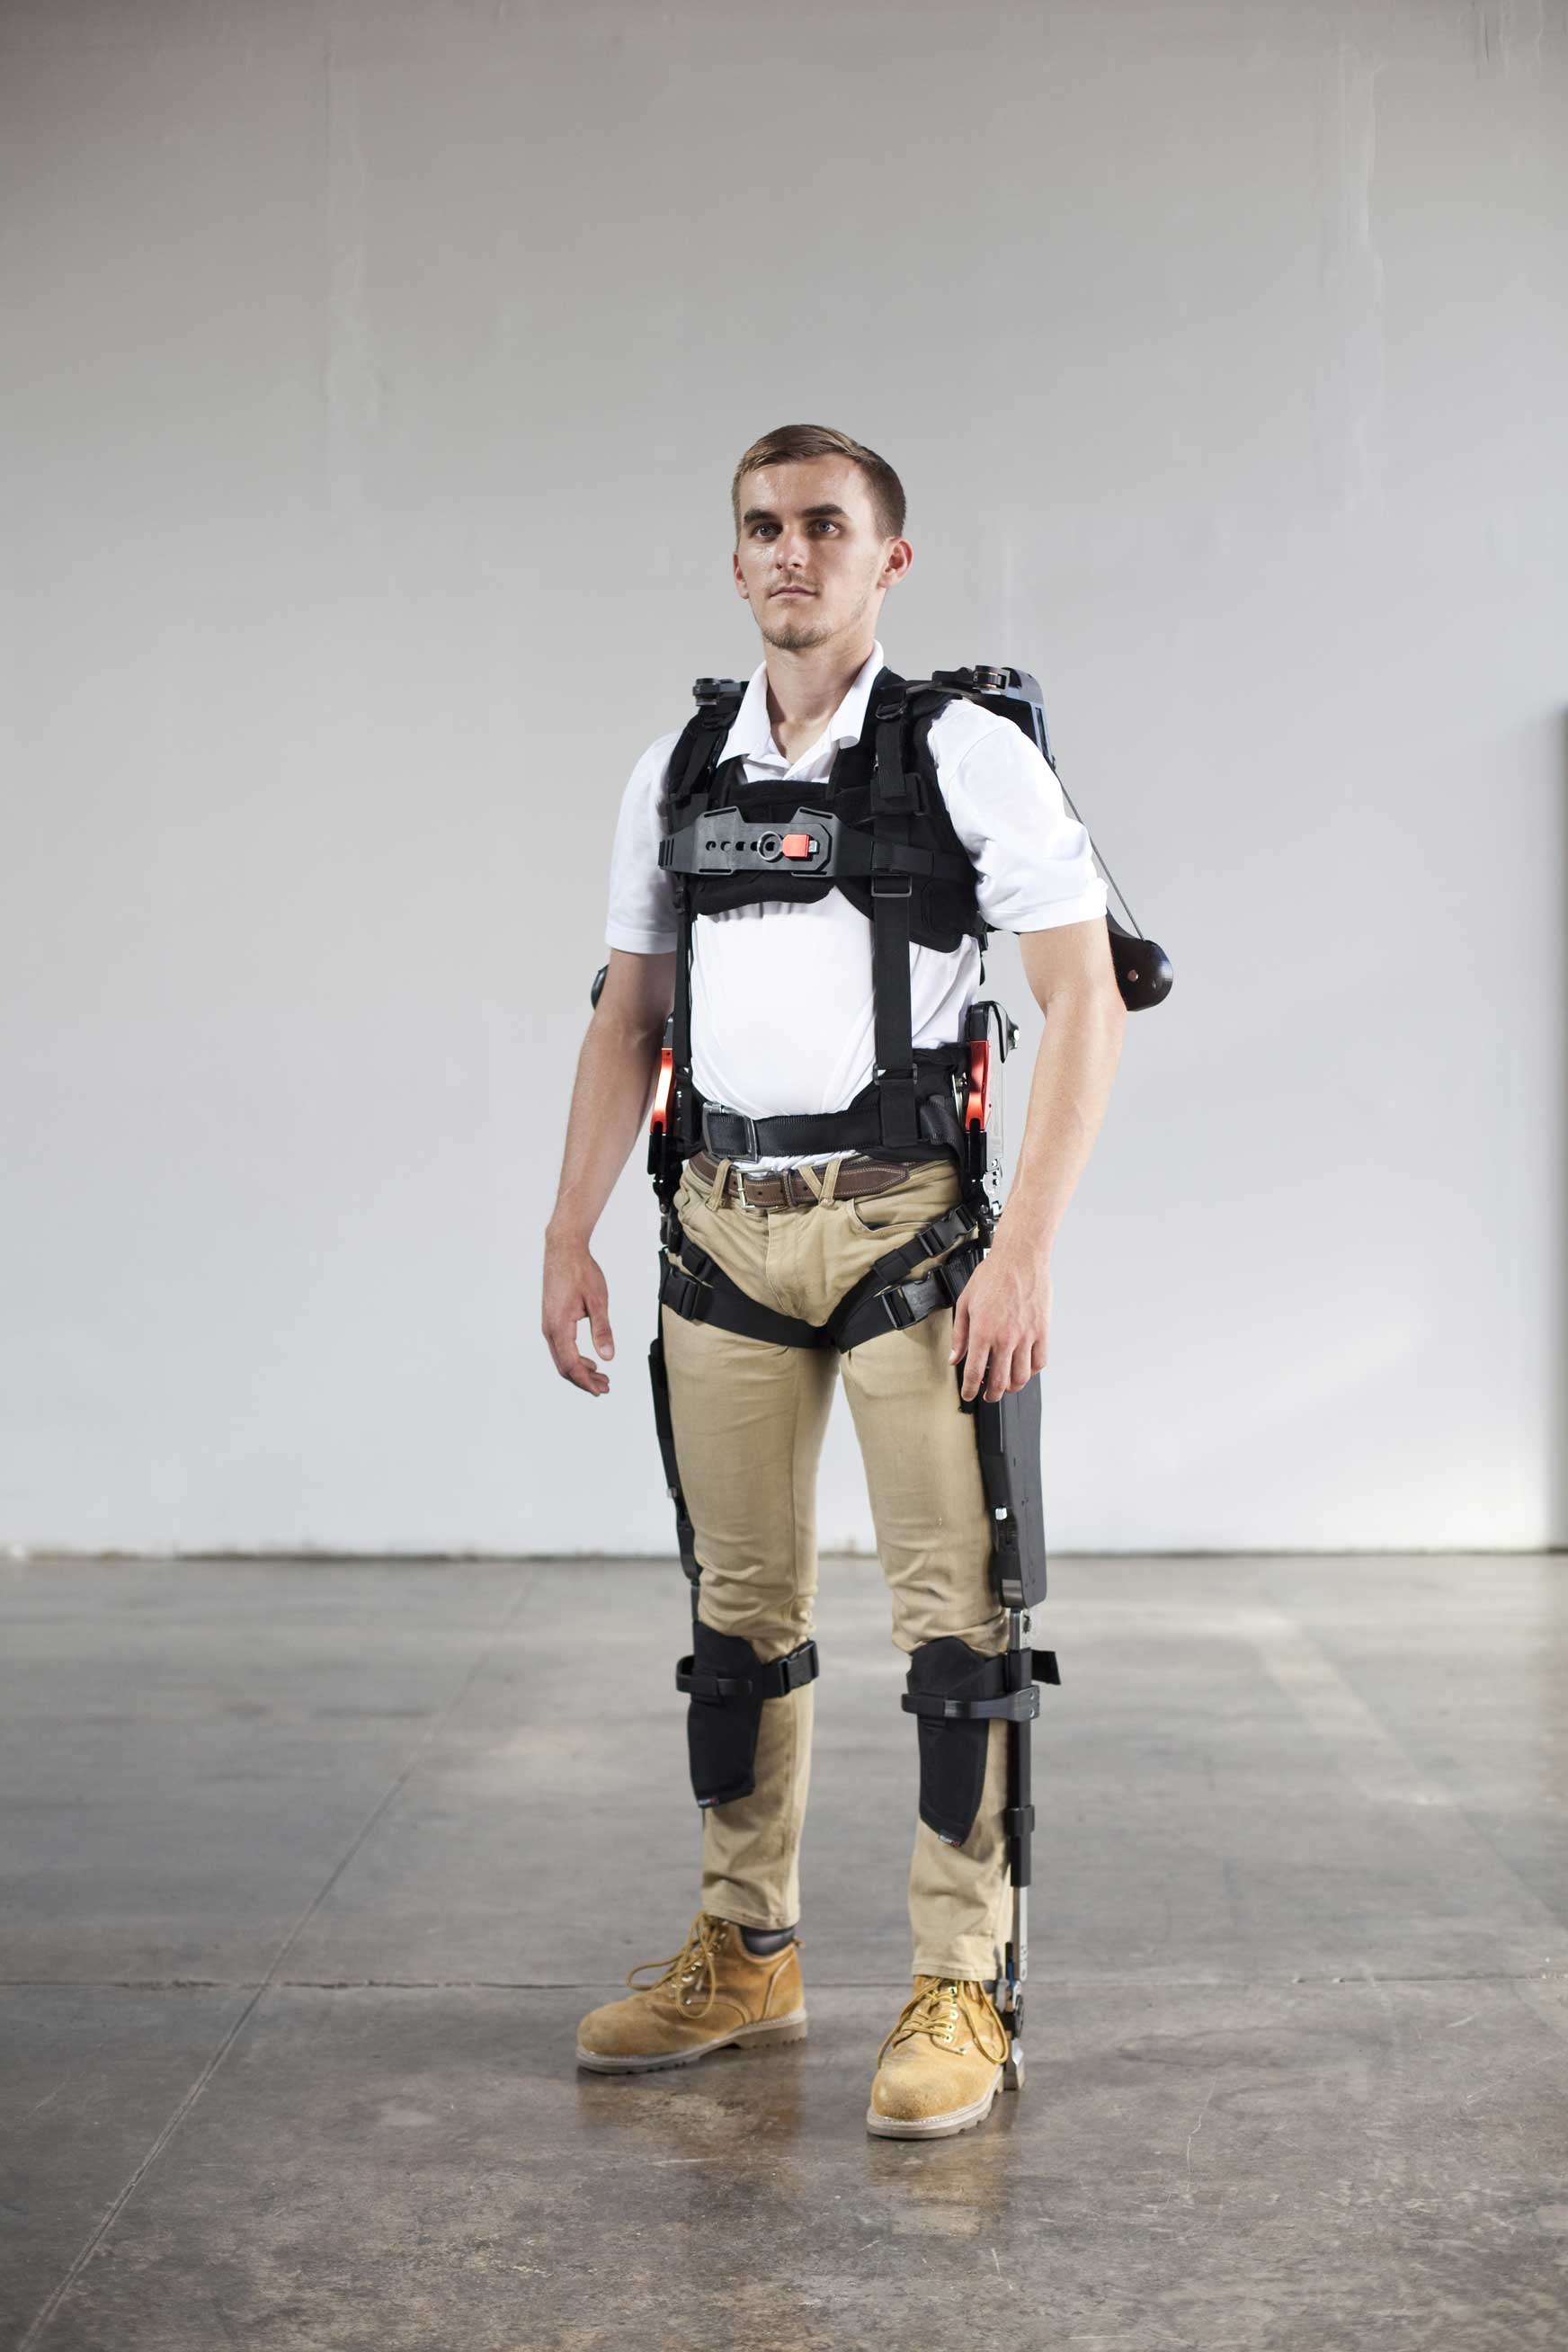 suitx外骨骼机器人受沃尔沃青睐 为劳动者提供安全防护